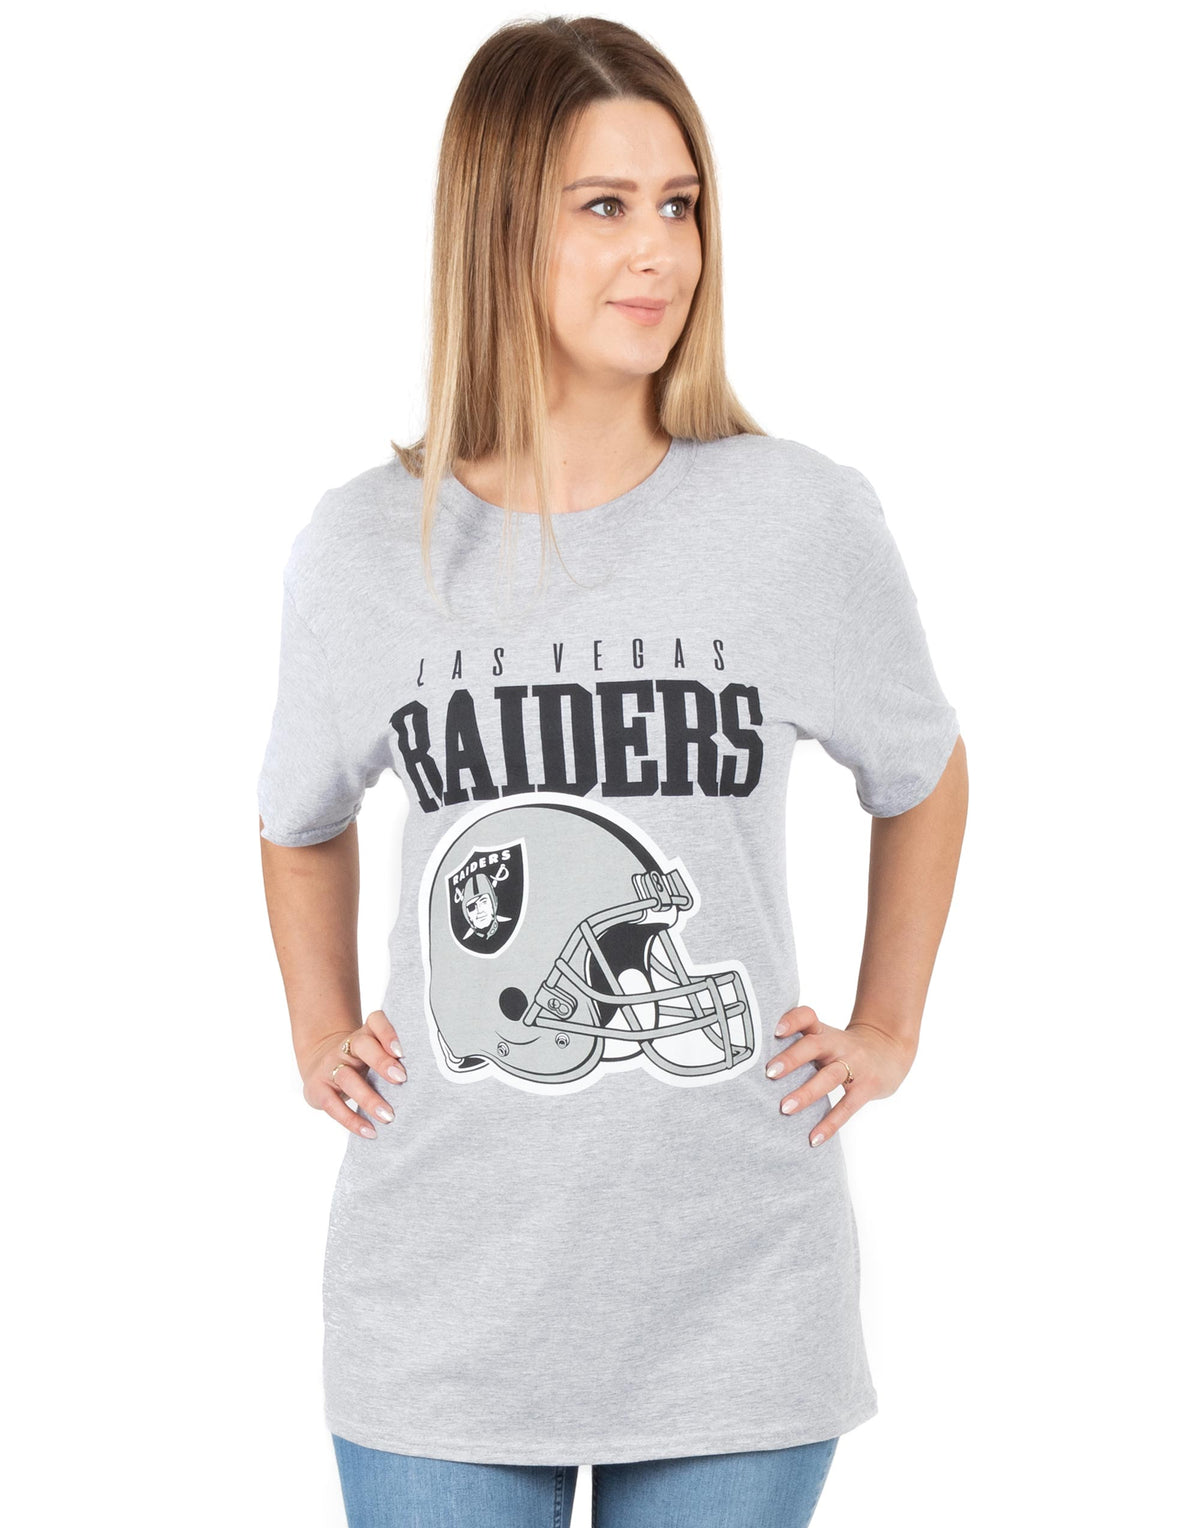 Las Vegas Raiders Football Sports Team T-shirt for Women and 